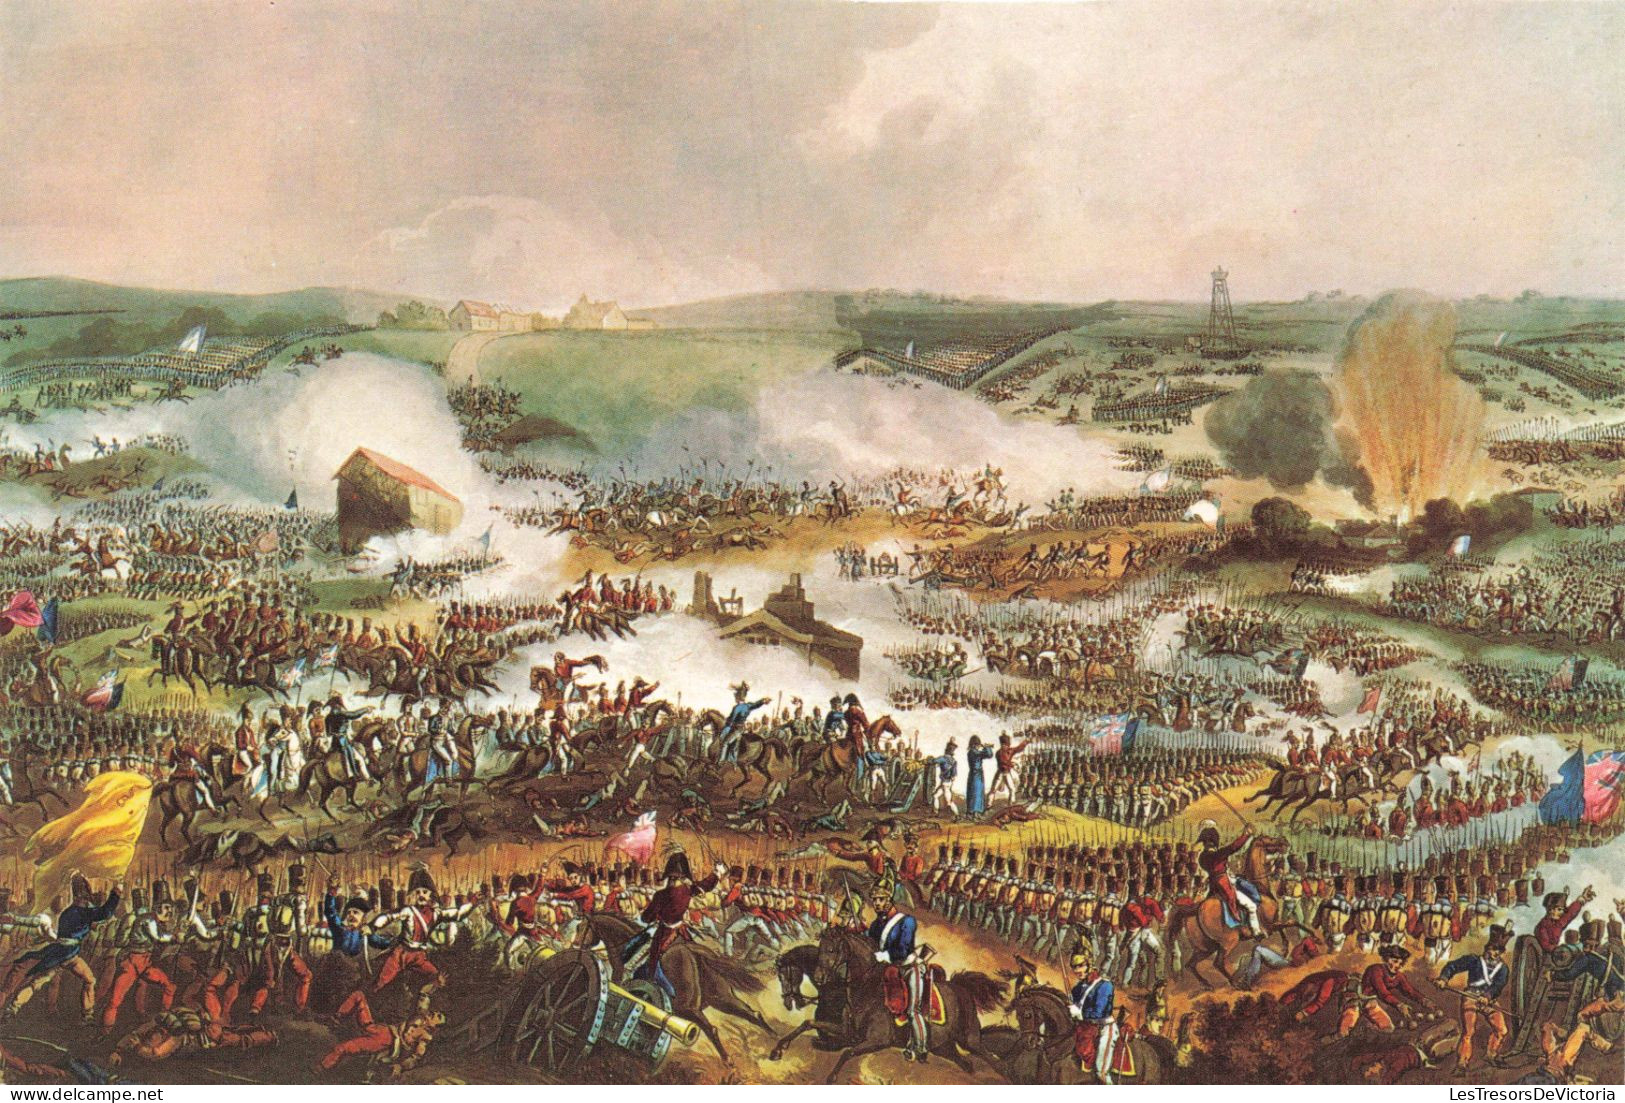 HISTOIRE - Waterloo - La Bataille De Waterloo - Carte Postale Ancienne - Geschichte